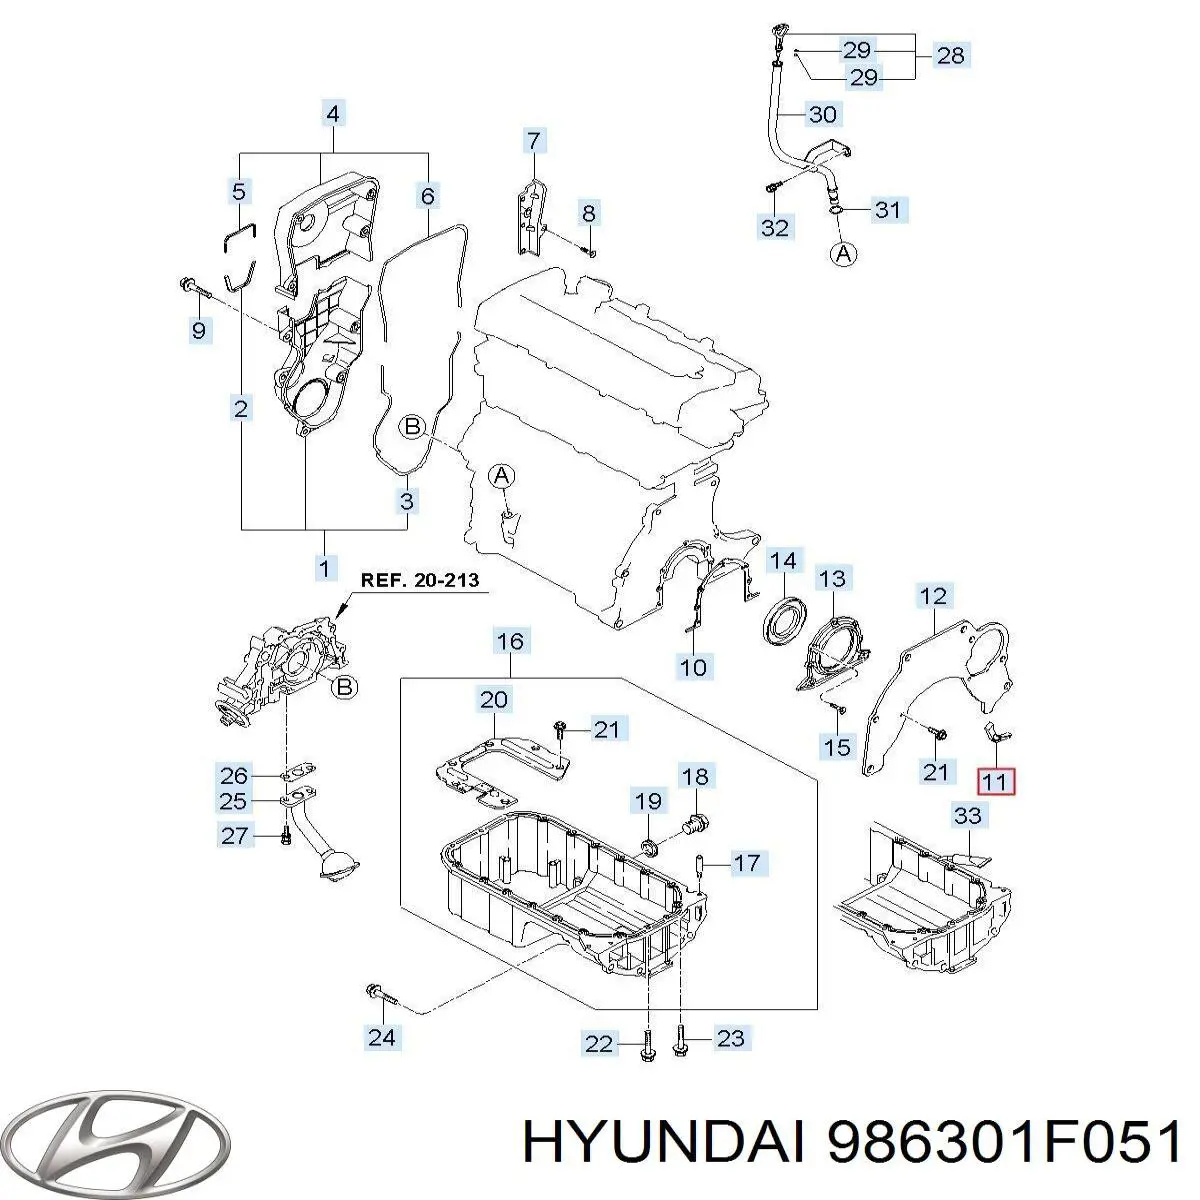 986301F051 Hyundai/Kia tobera de agua regadora, lavado de parabrisas, derecha